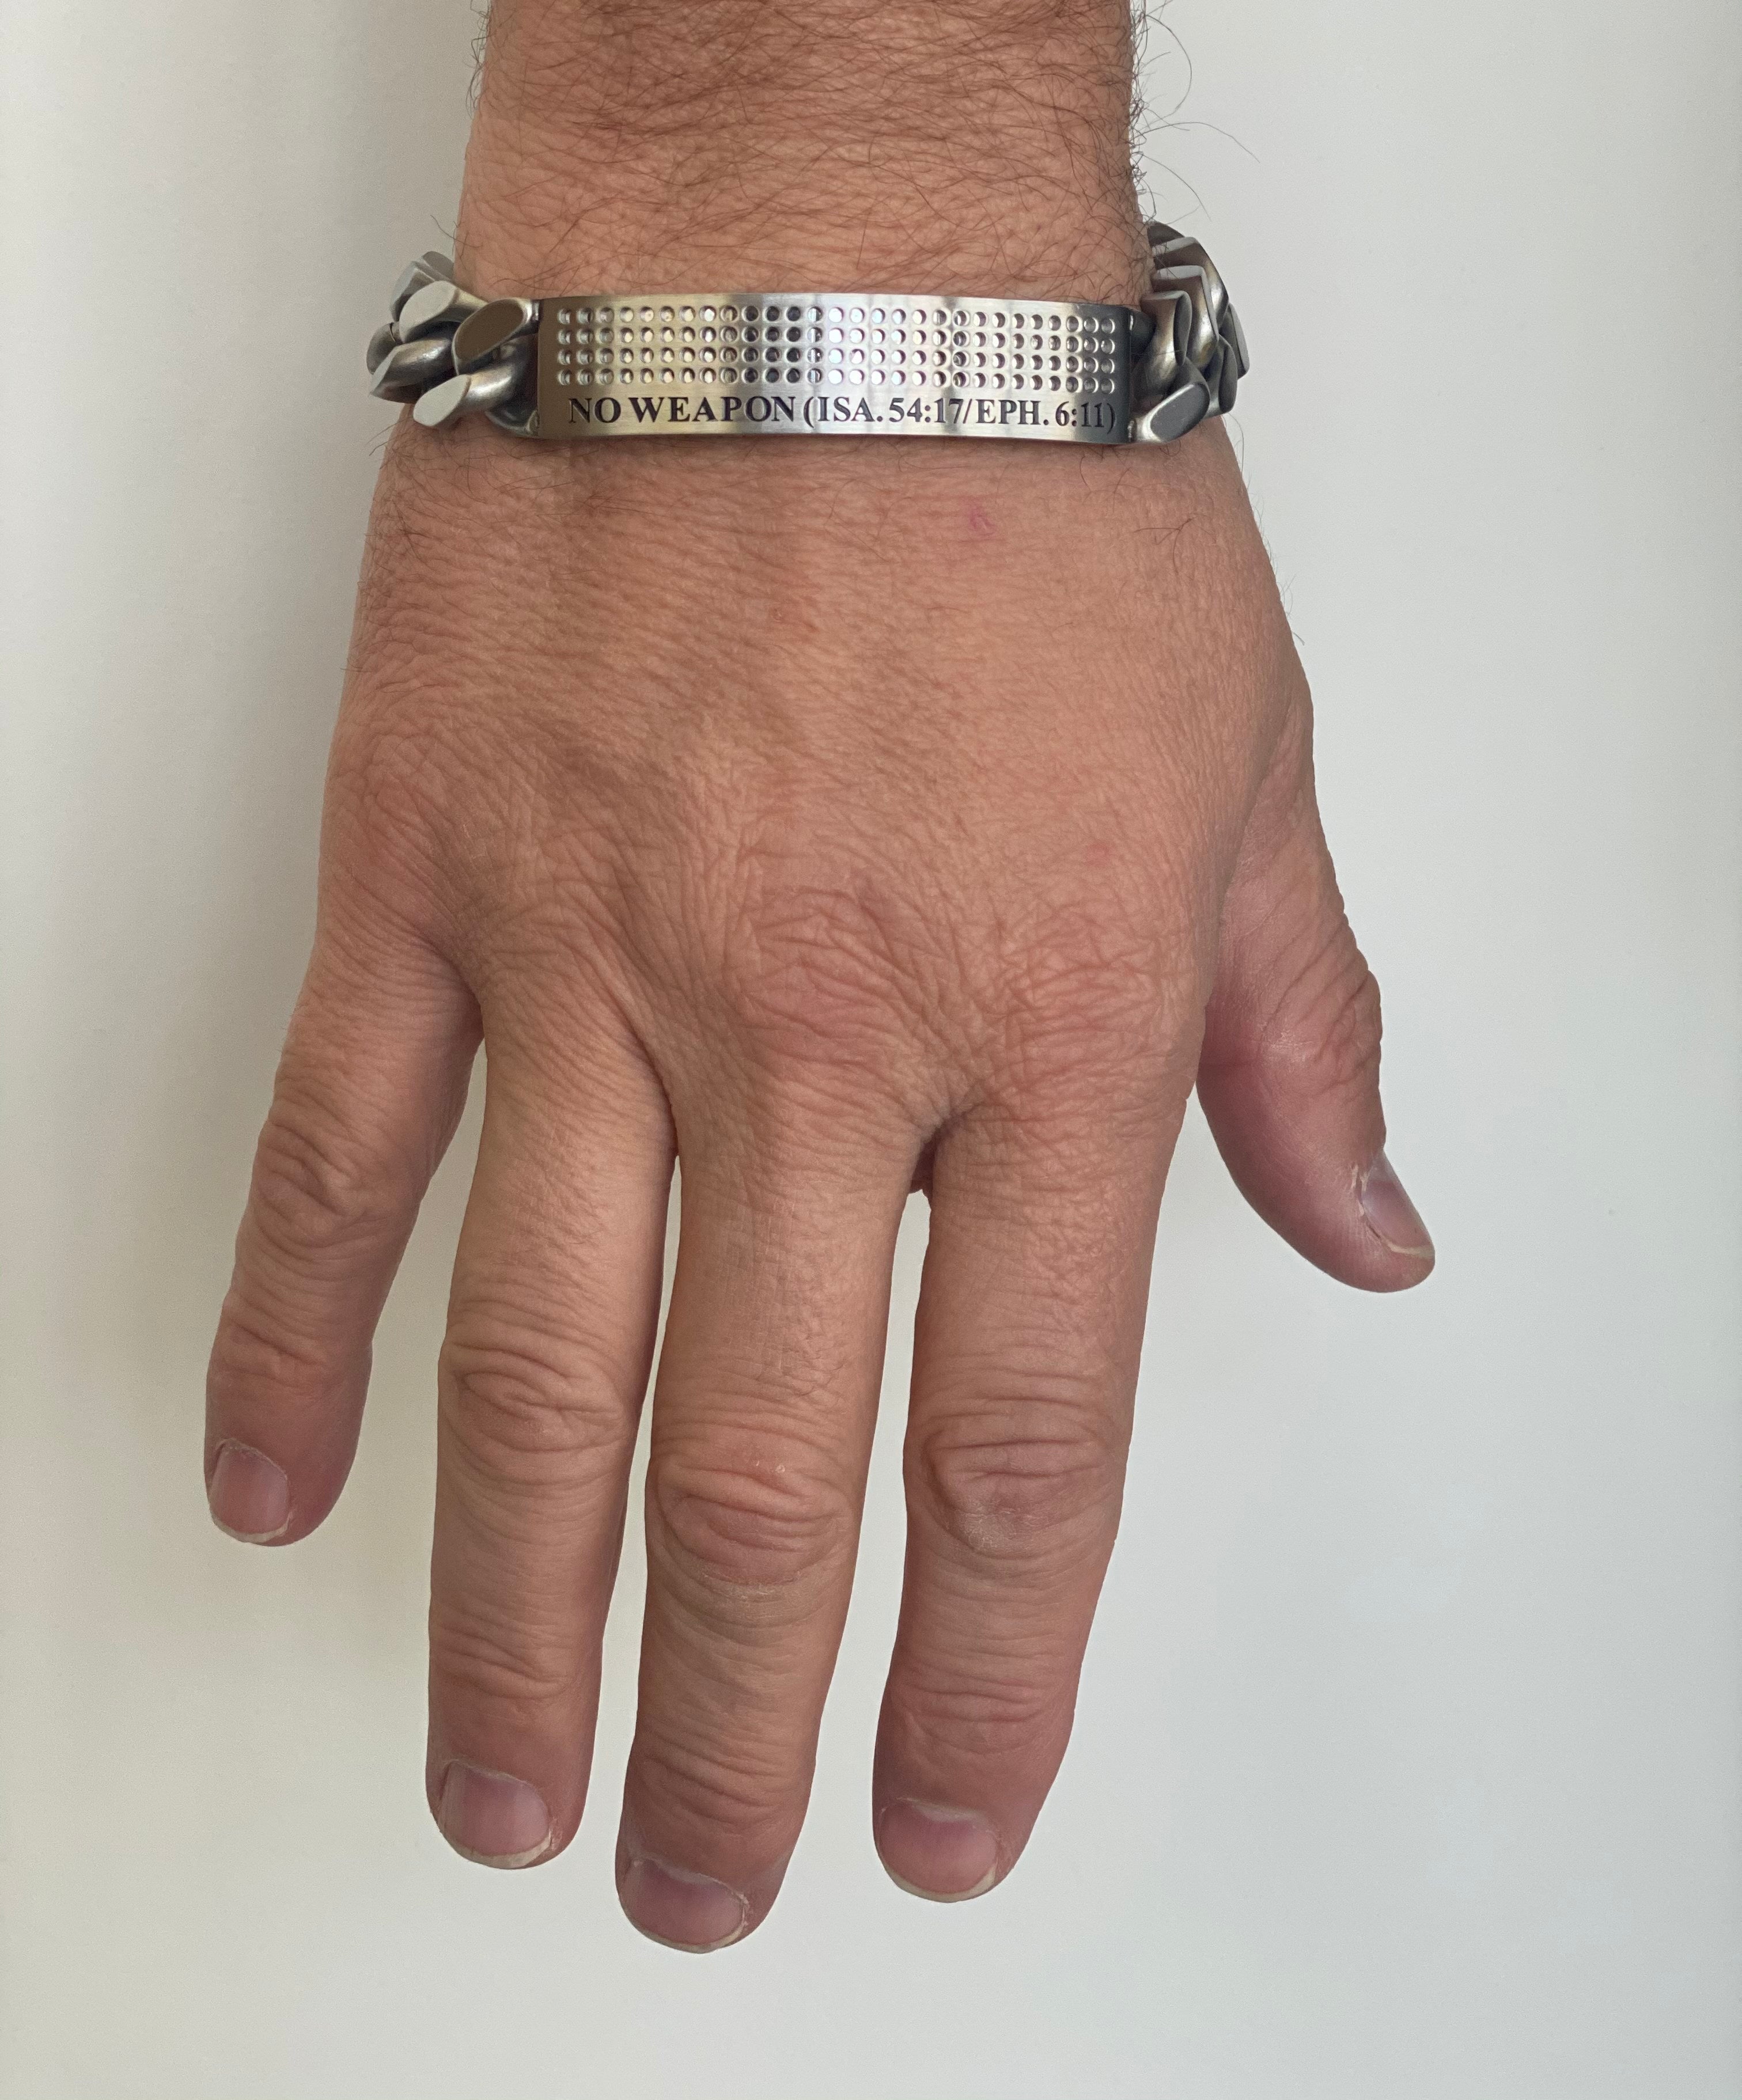 Leather Cross Bracelet | Christian Women Jewelry - Corinthian's Corner